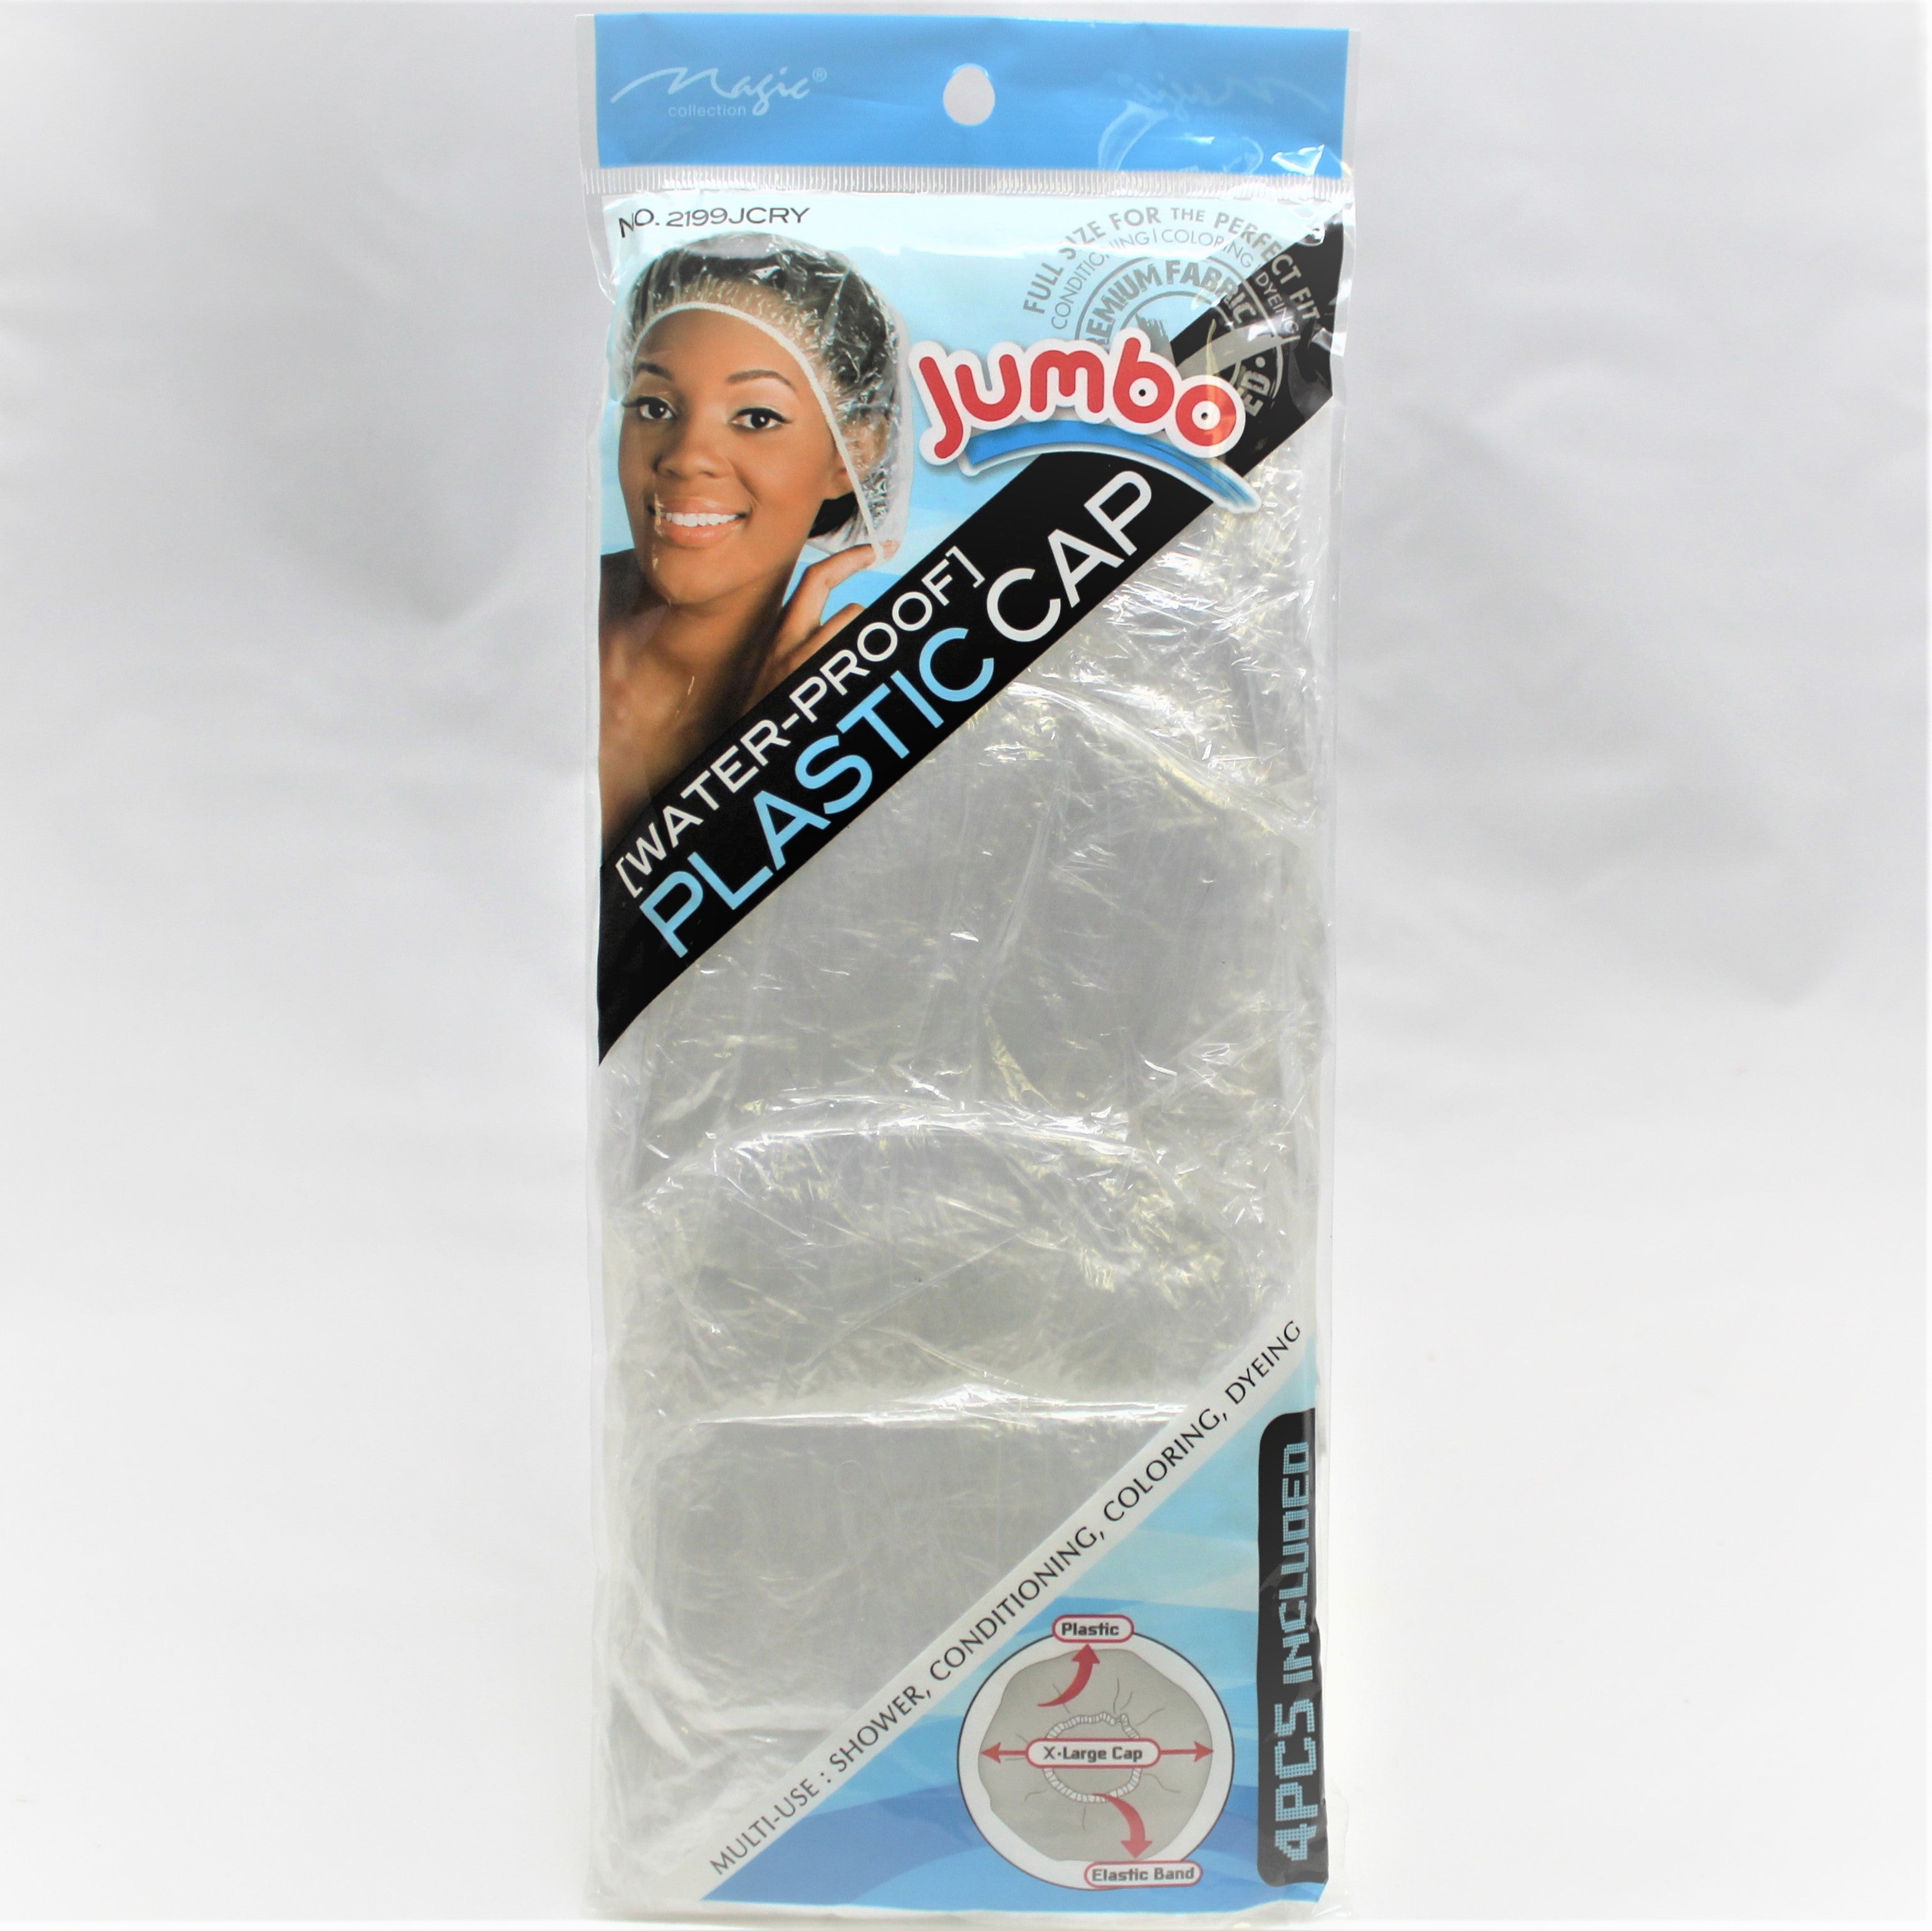 Magic Collection Jumbo Plastic Cap 2199JCRY - Beauty Bar & Supply